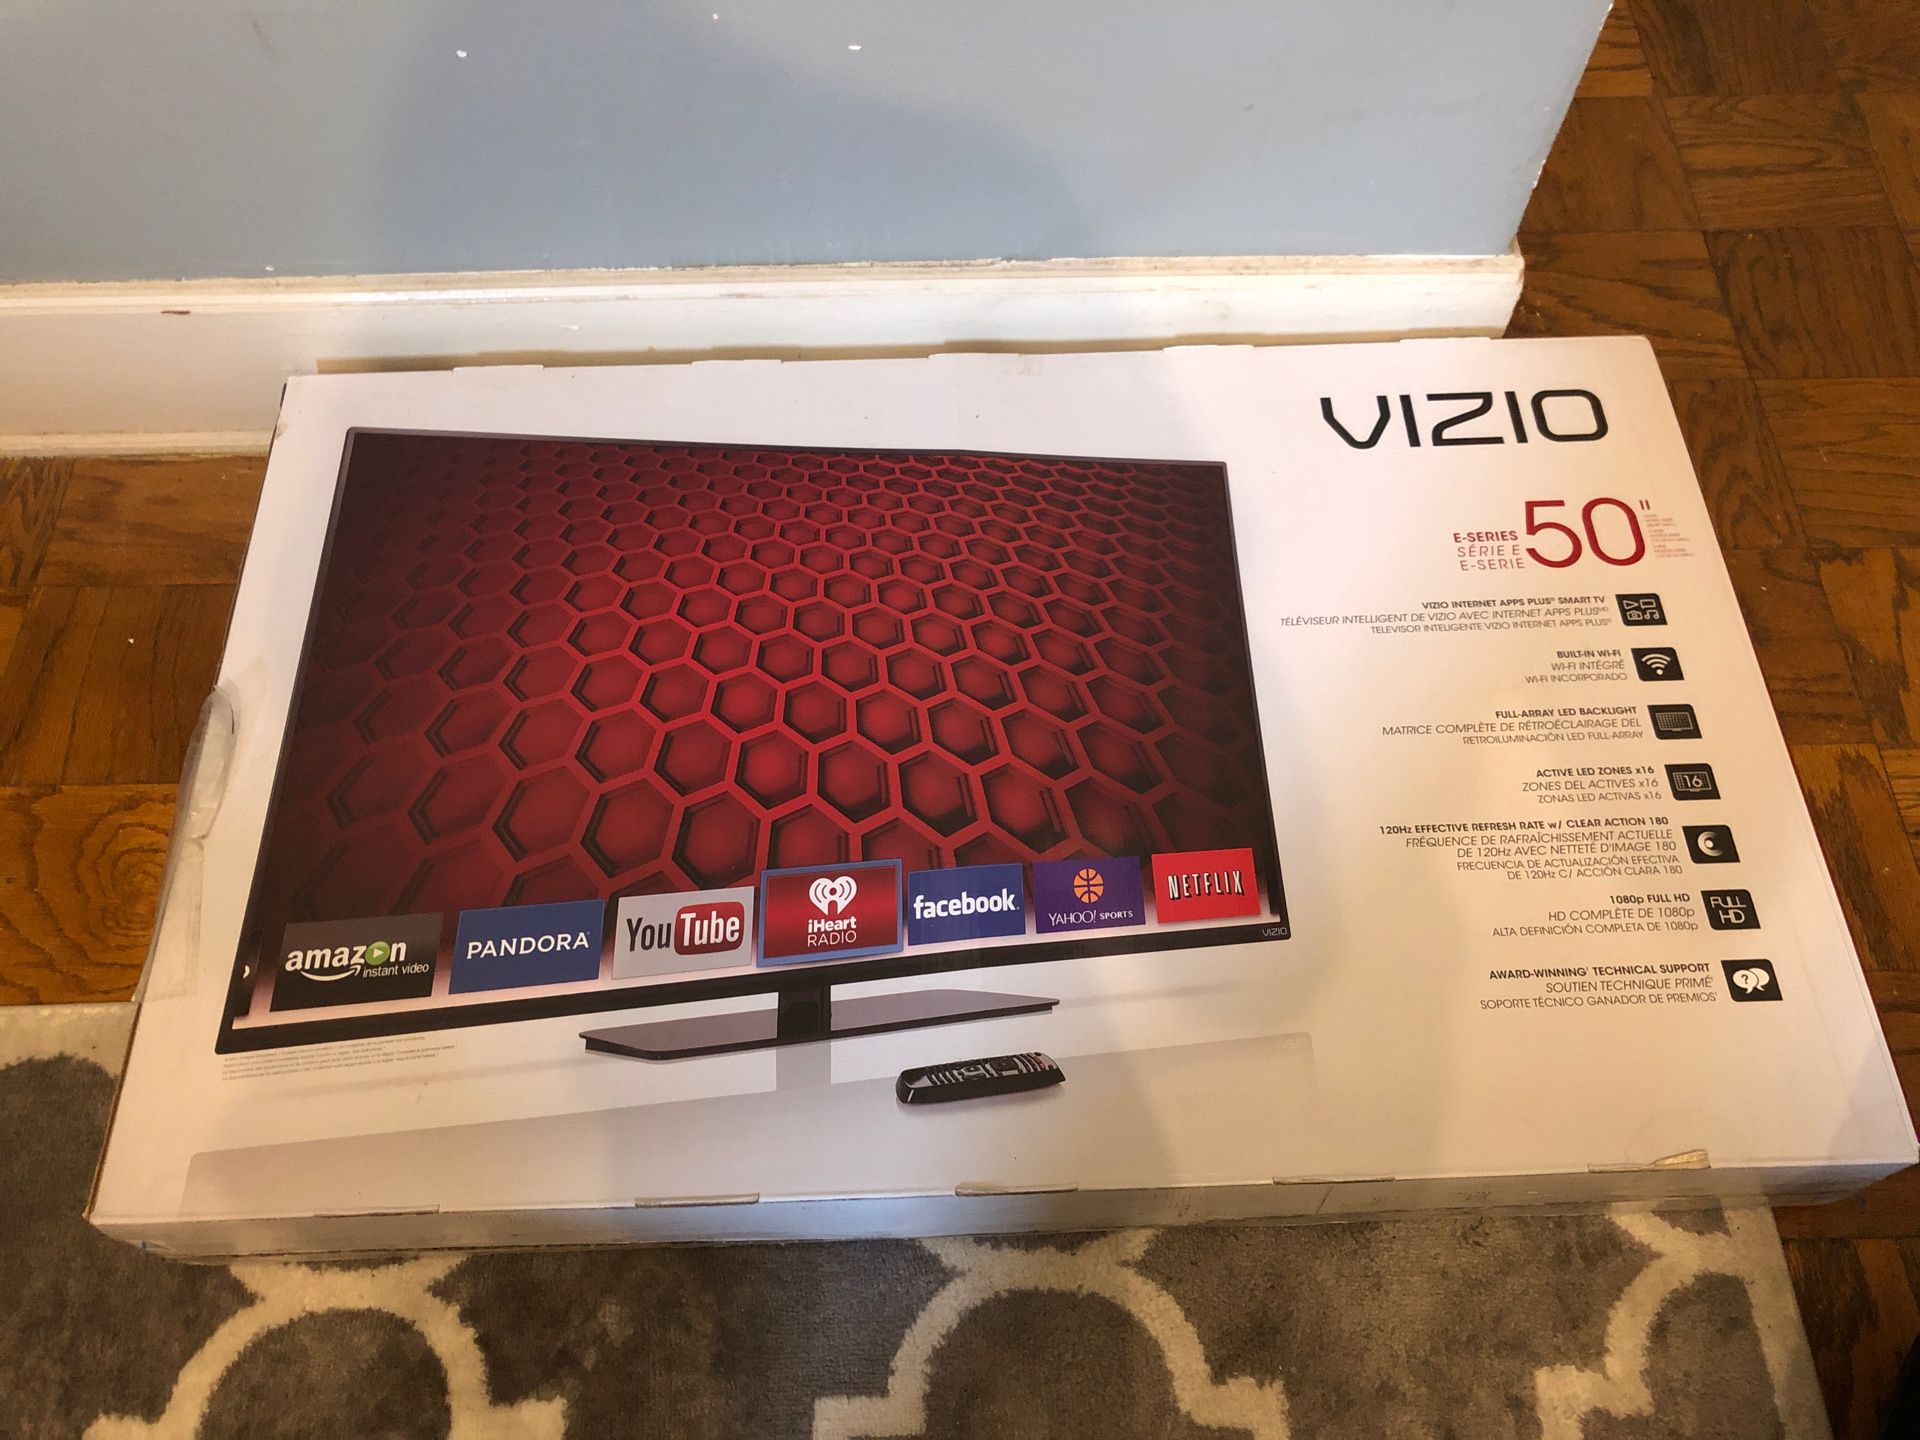 Vizio 50” smart TV + additional Roku stick